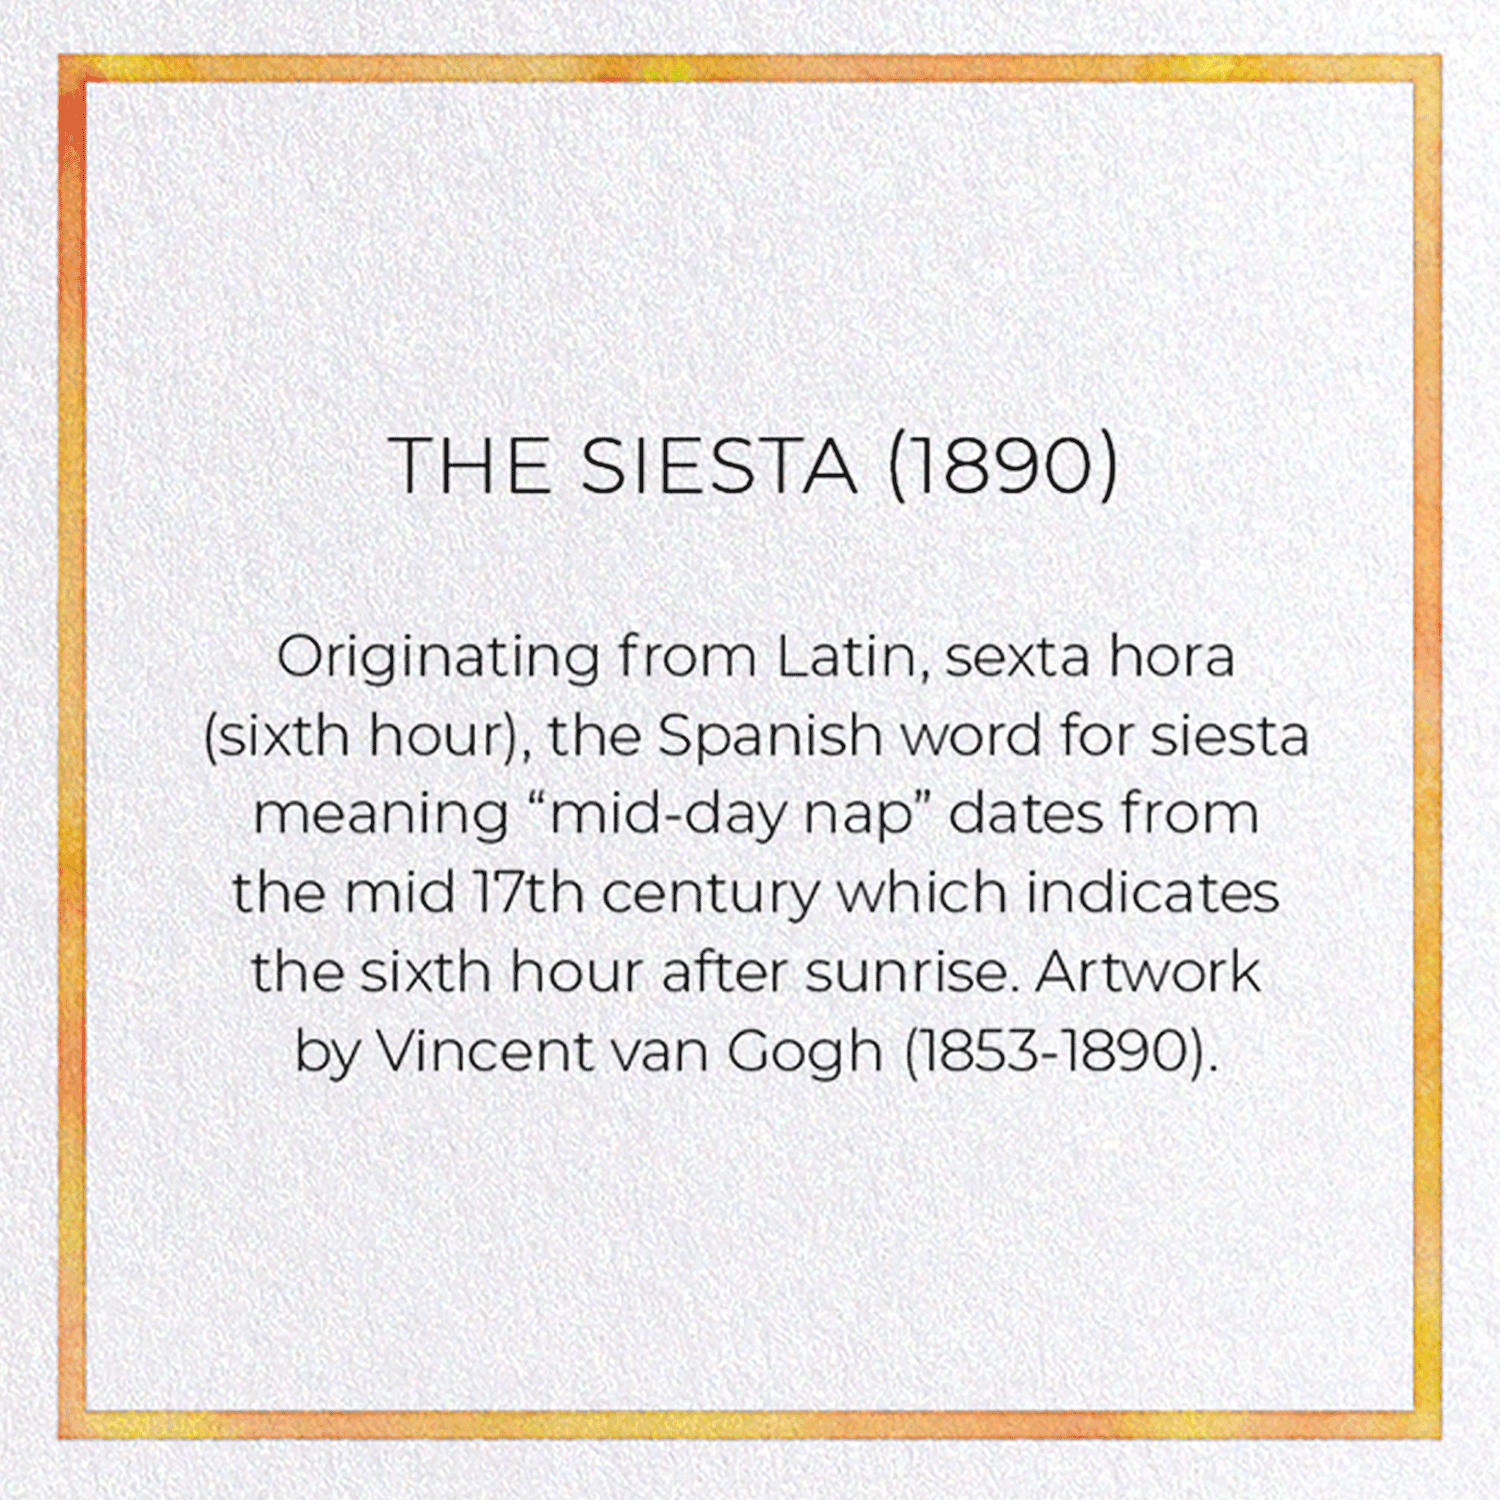 THE SIESTA (1890)